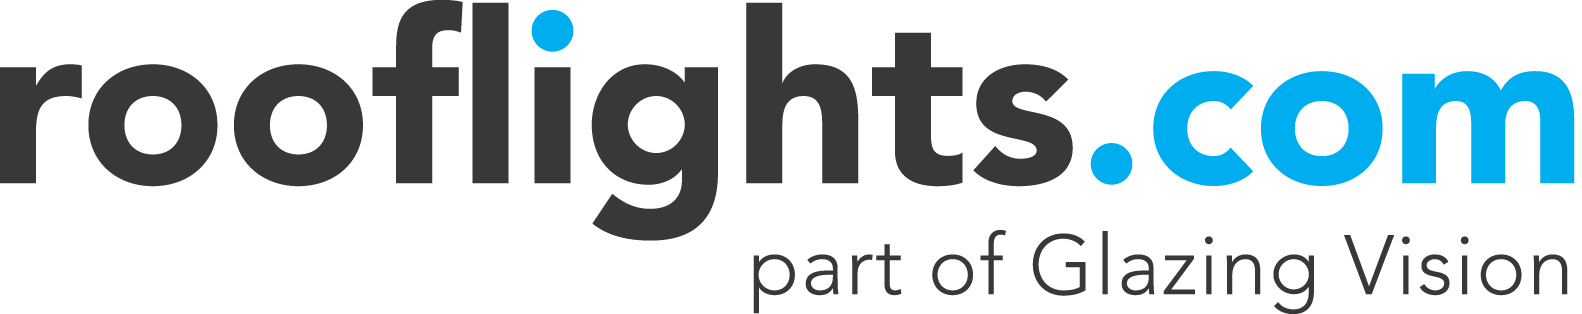 Rooflights.com logo